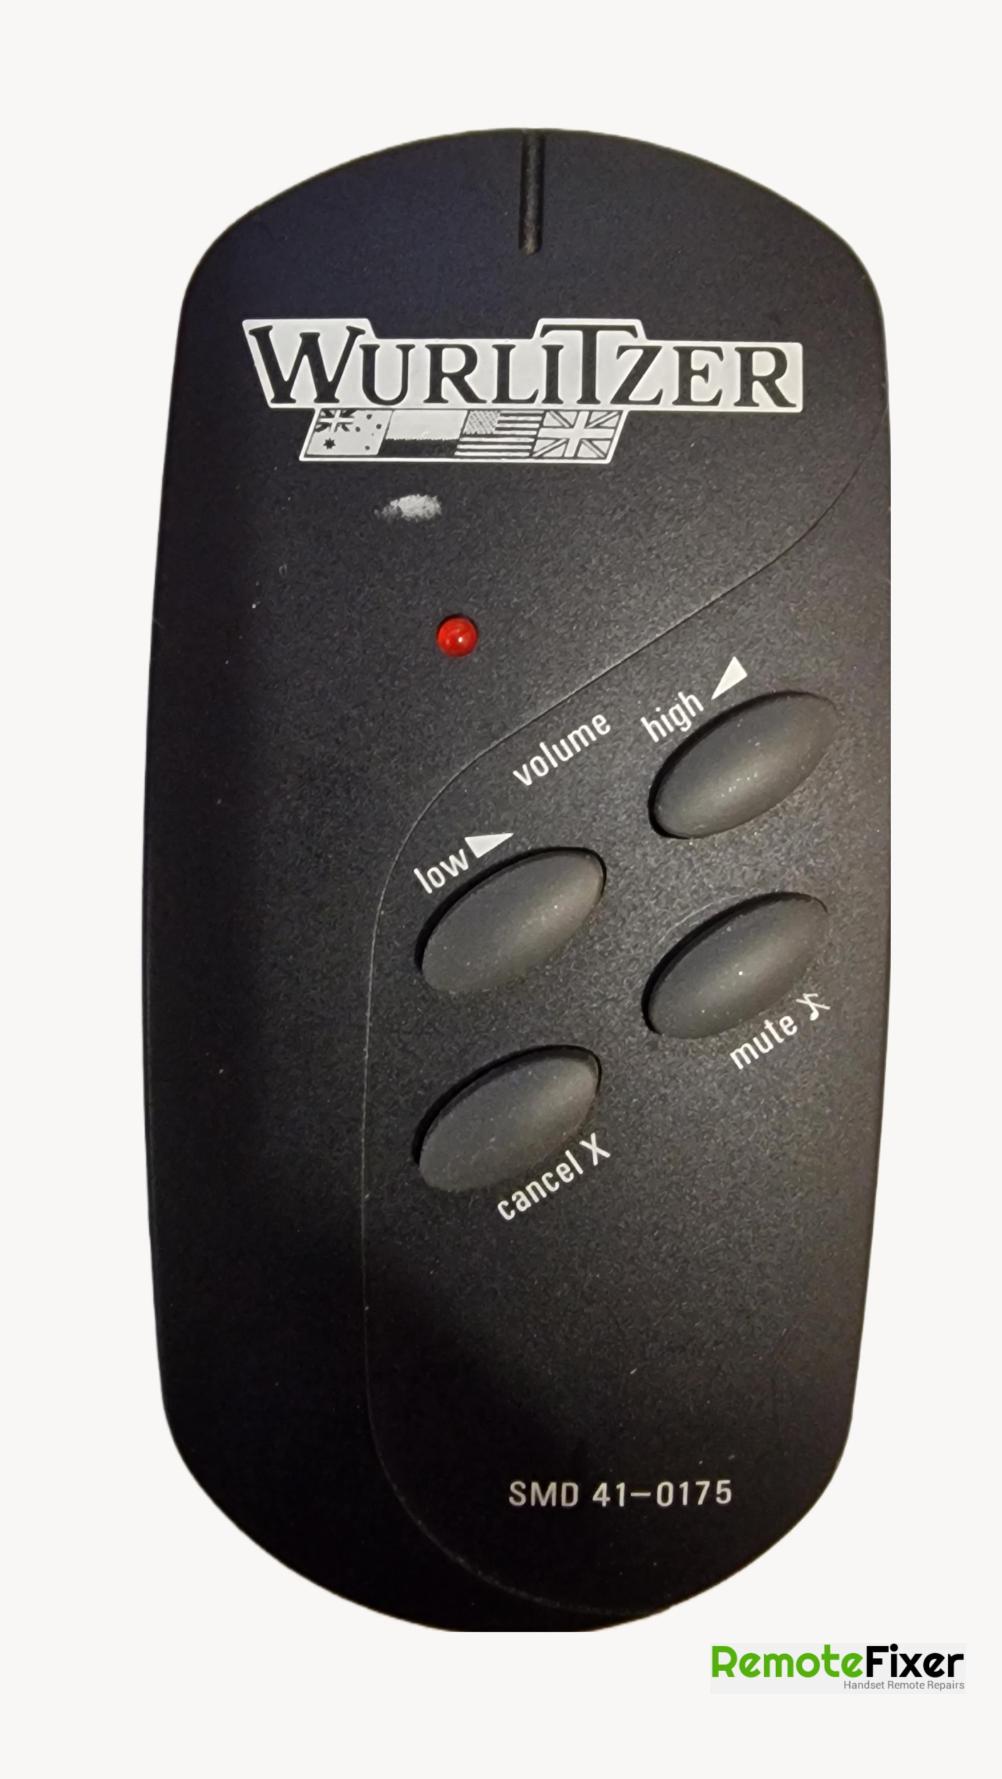 Wurlitzer SMD41-0175 Remote Control - Front Image